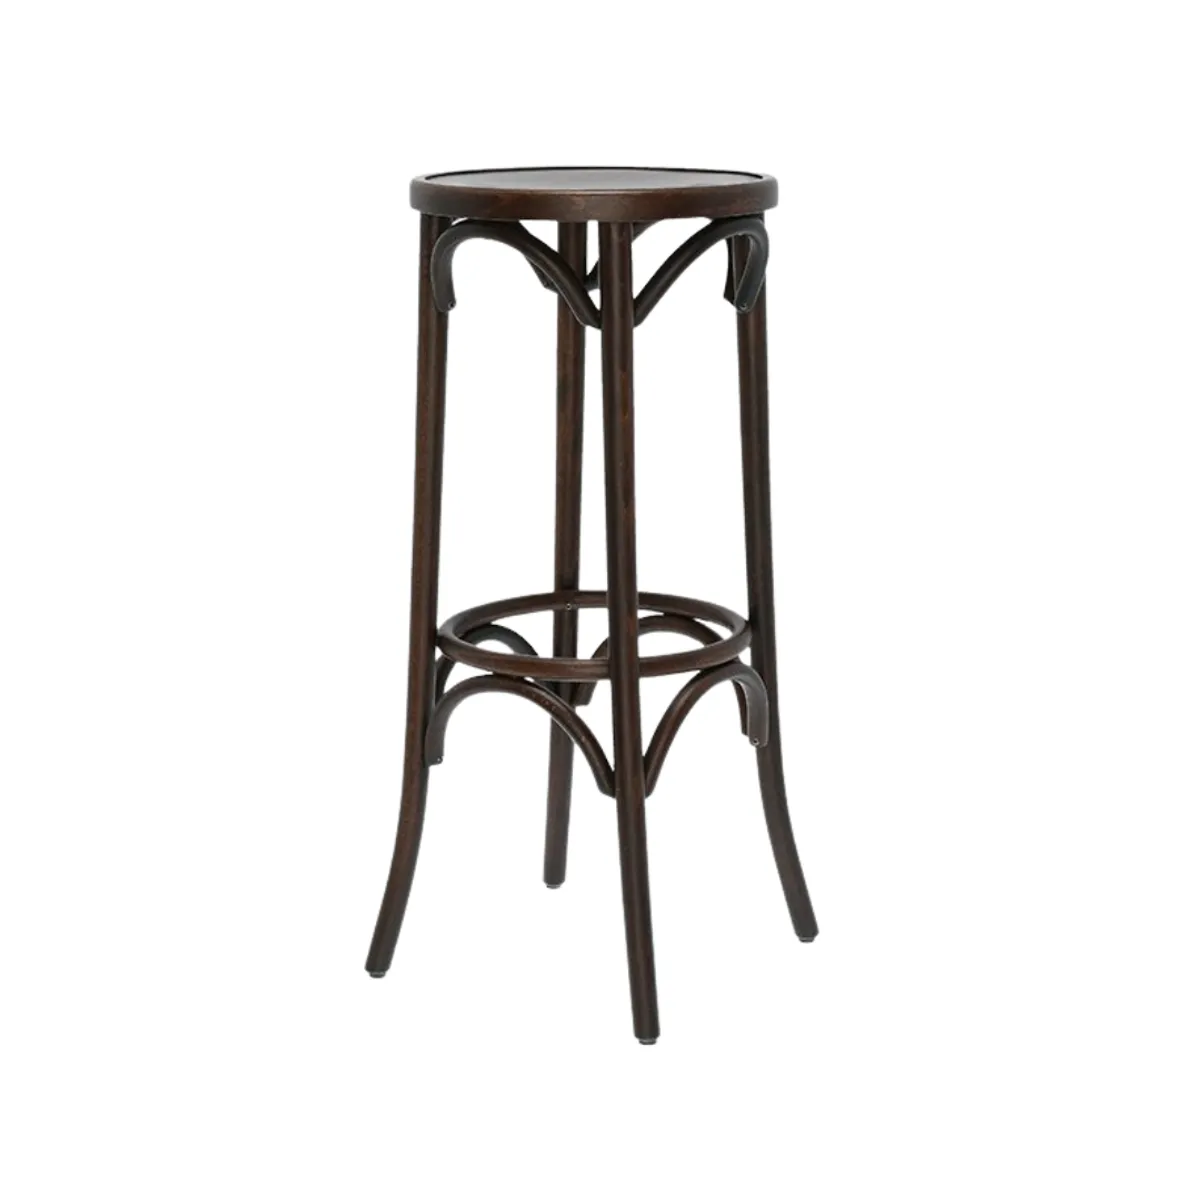 Bentwood stool product image 2